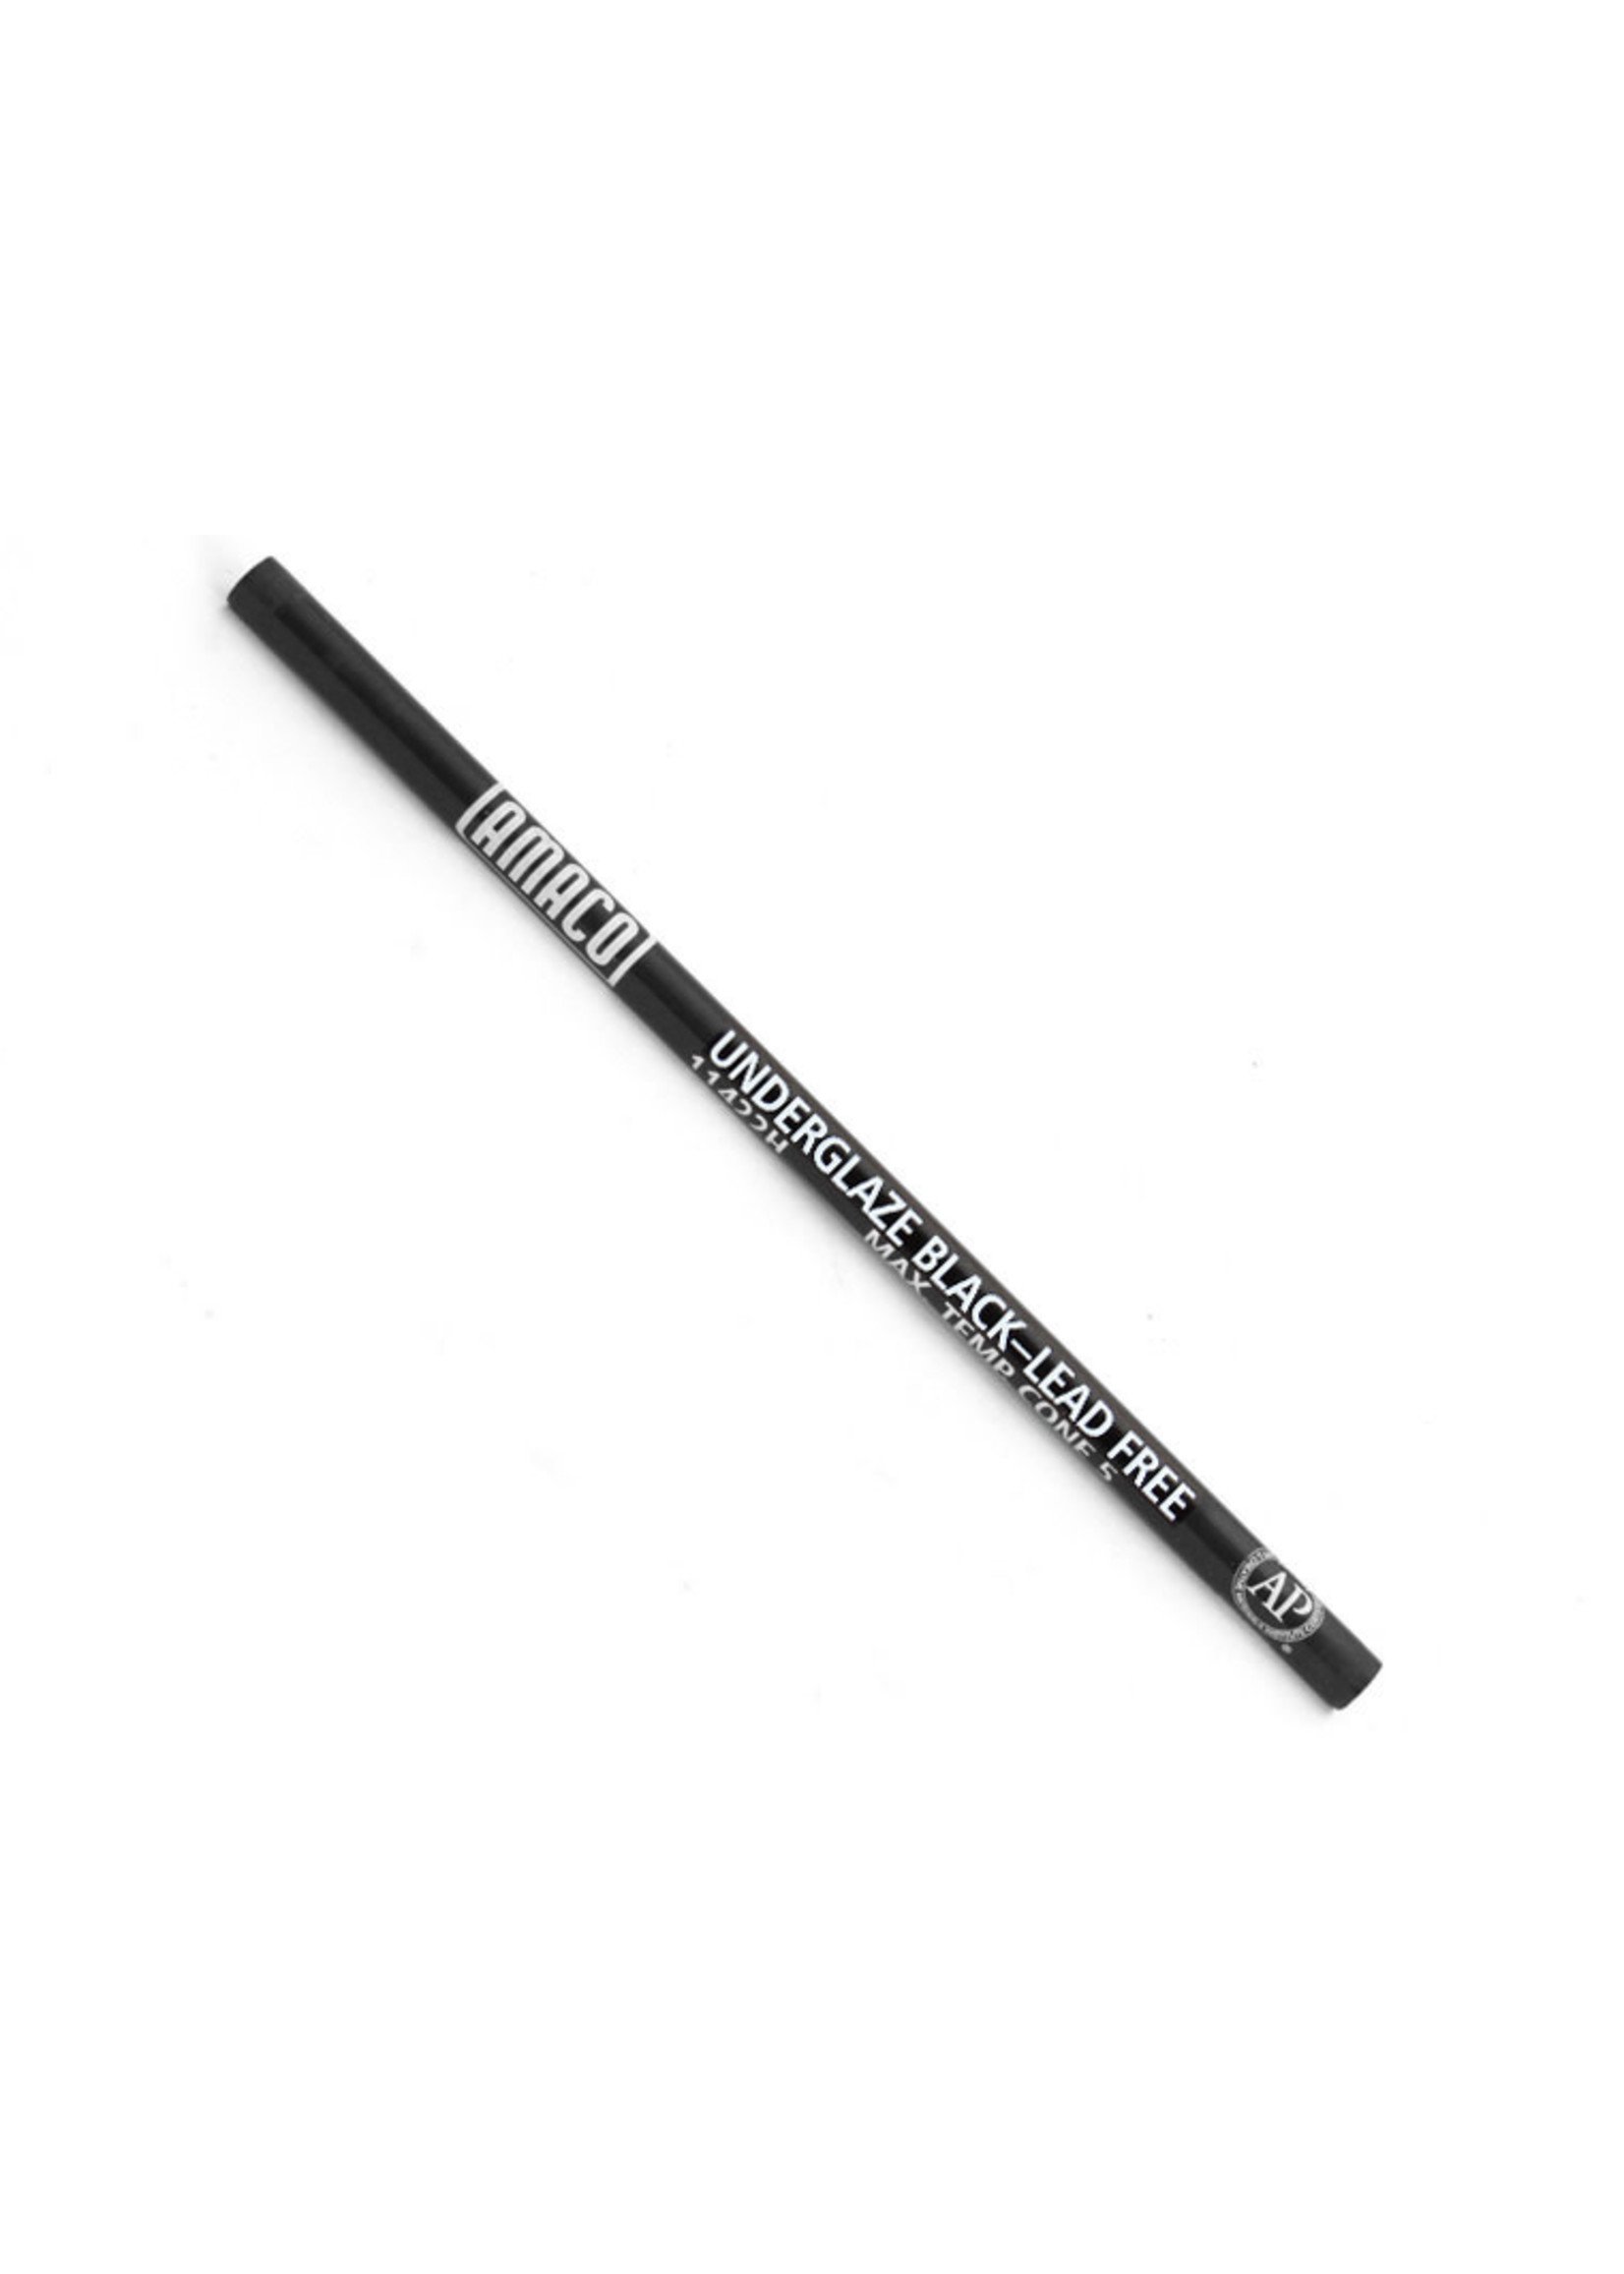 American Art Clay Co. Black Underglaze Pencil